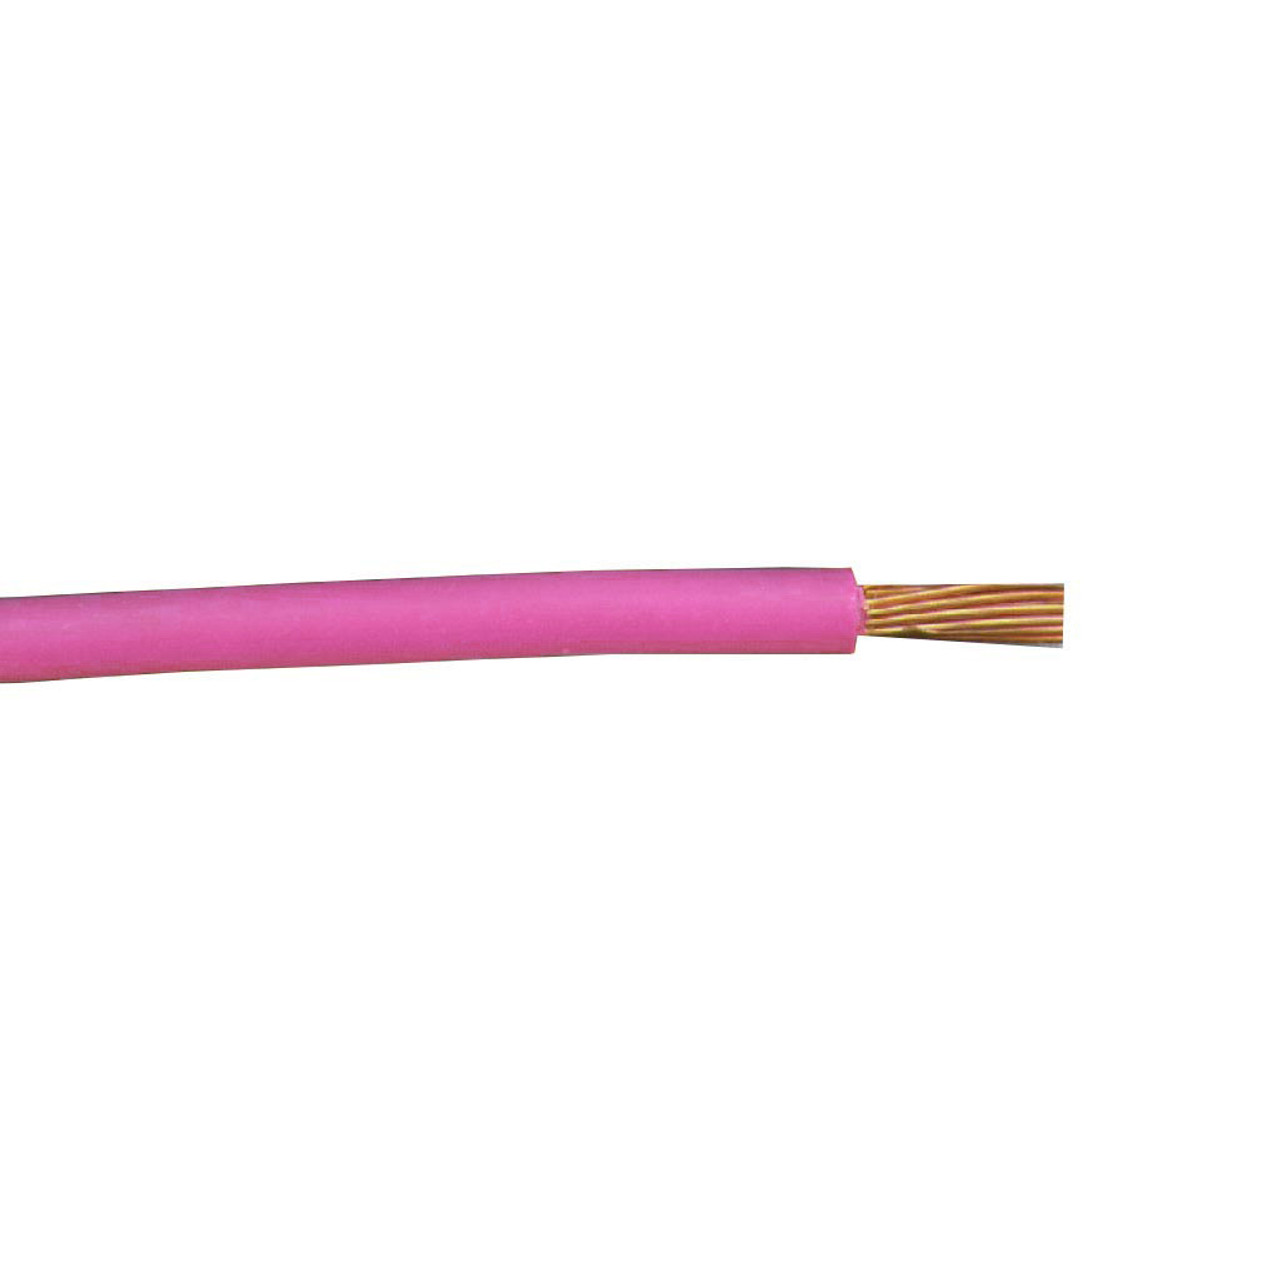 16 AWG Pink, Automotive Hook-Up Wire - Hi-Line Inc.